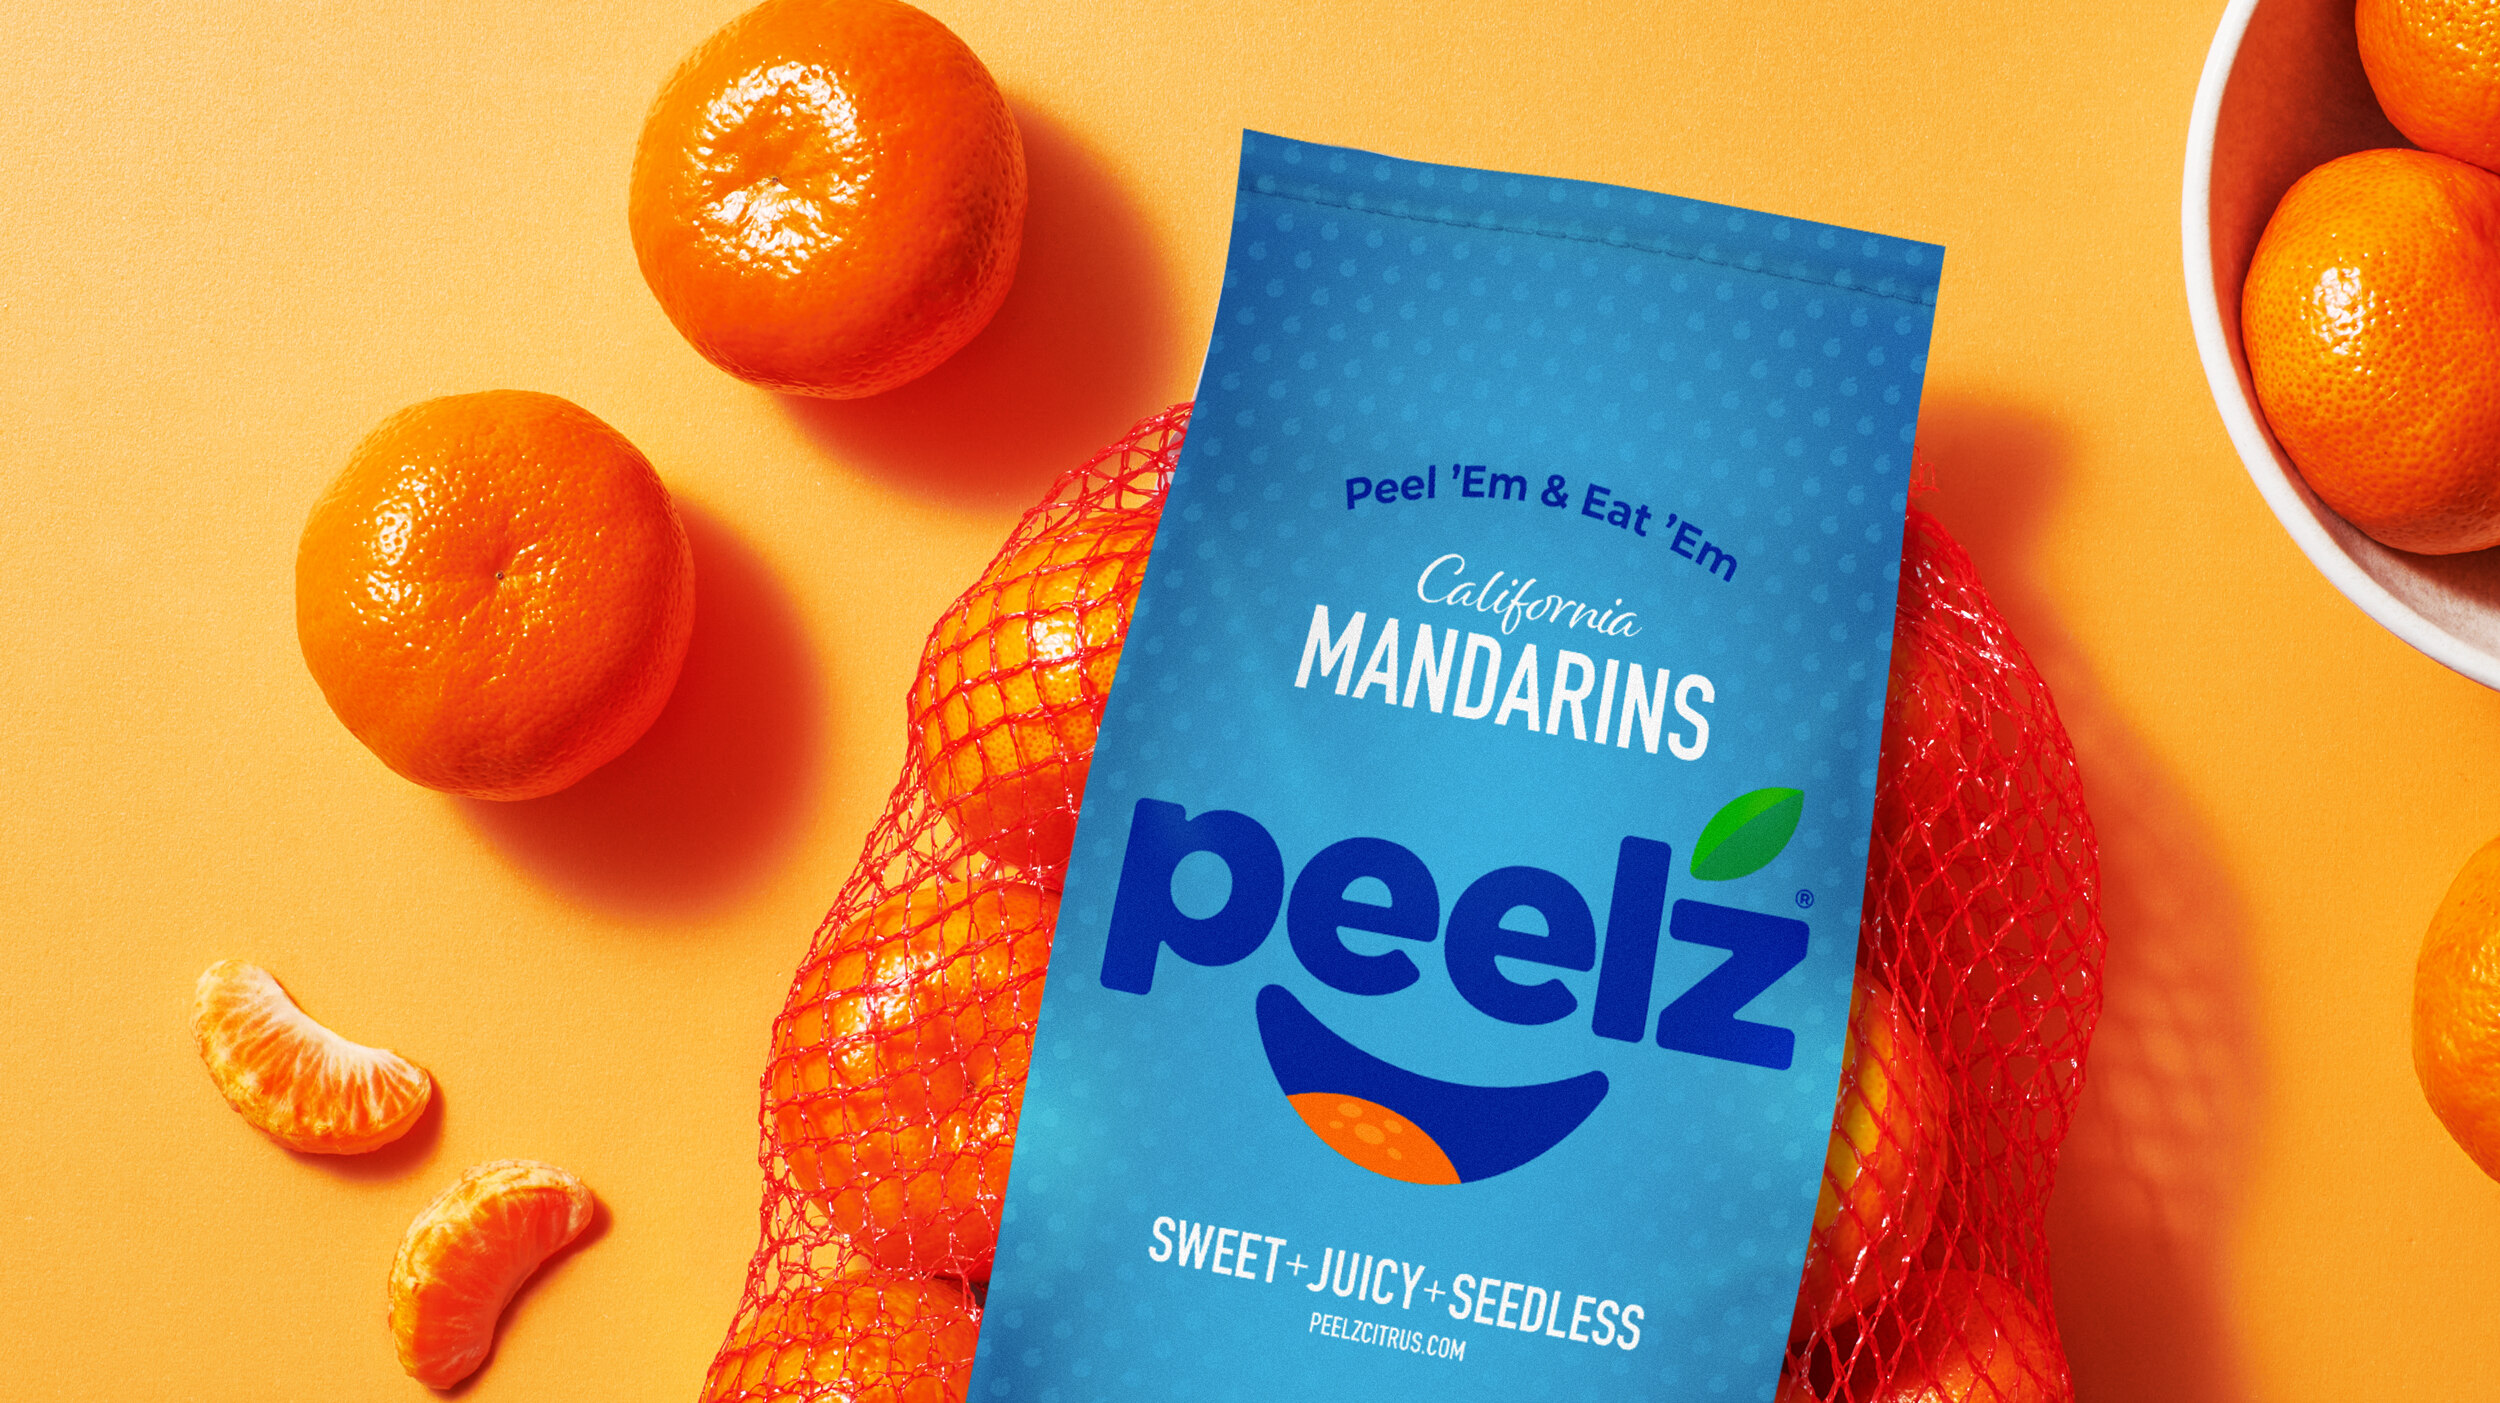 A pack of Peelz mandarin oranges sitting on a orange backdrop